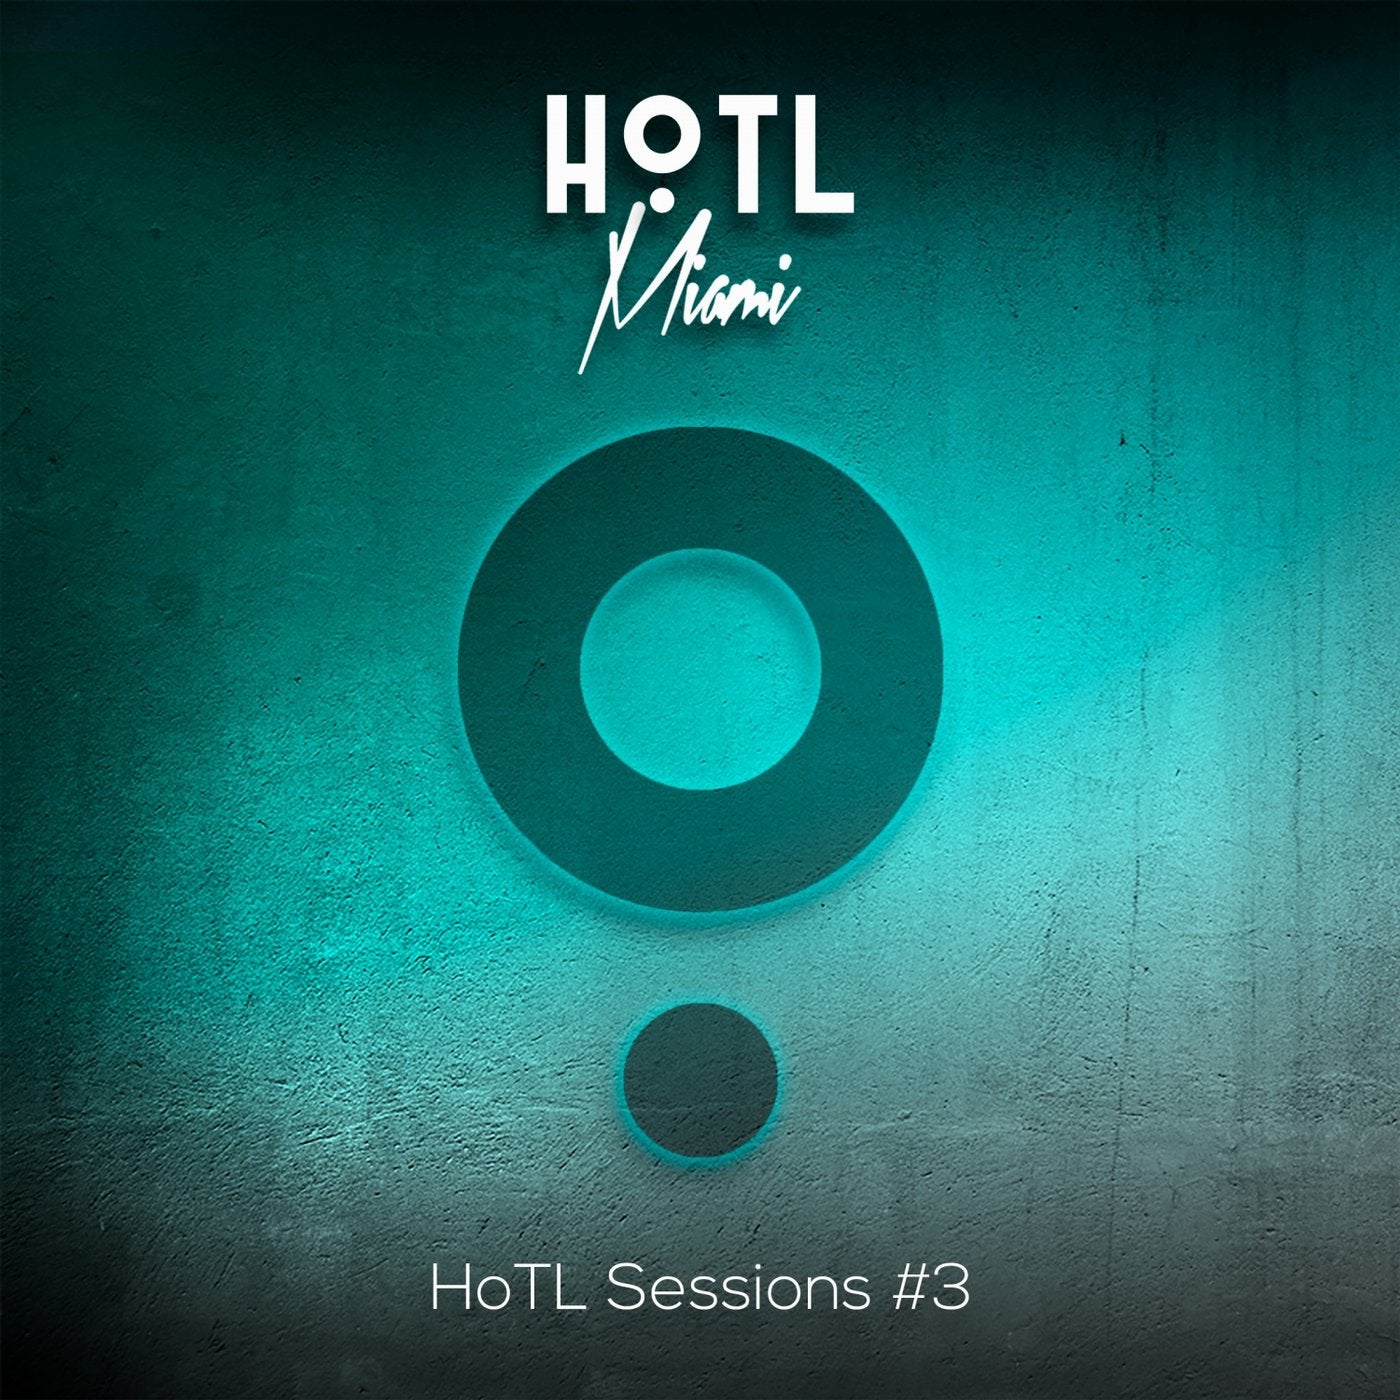 HoTL Sessions #3: Miami